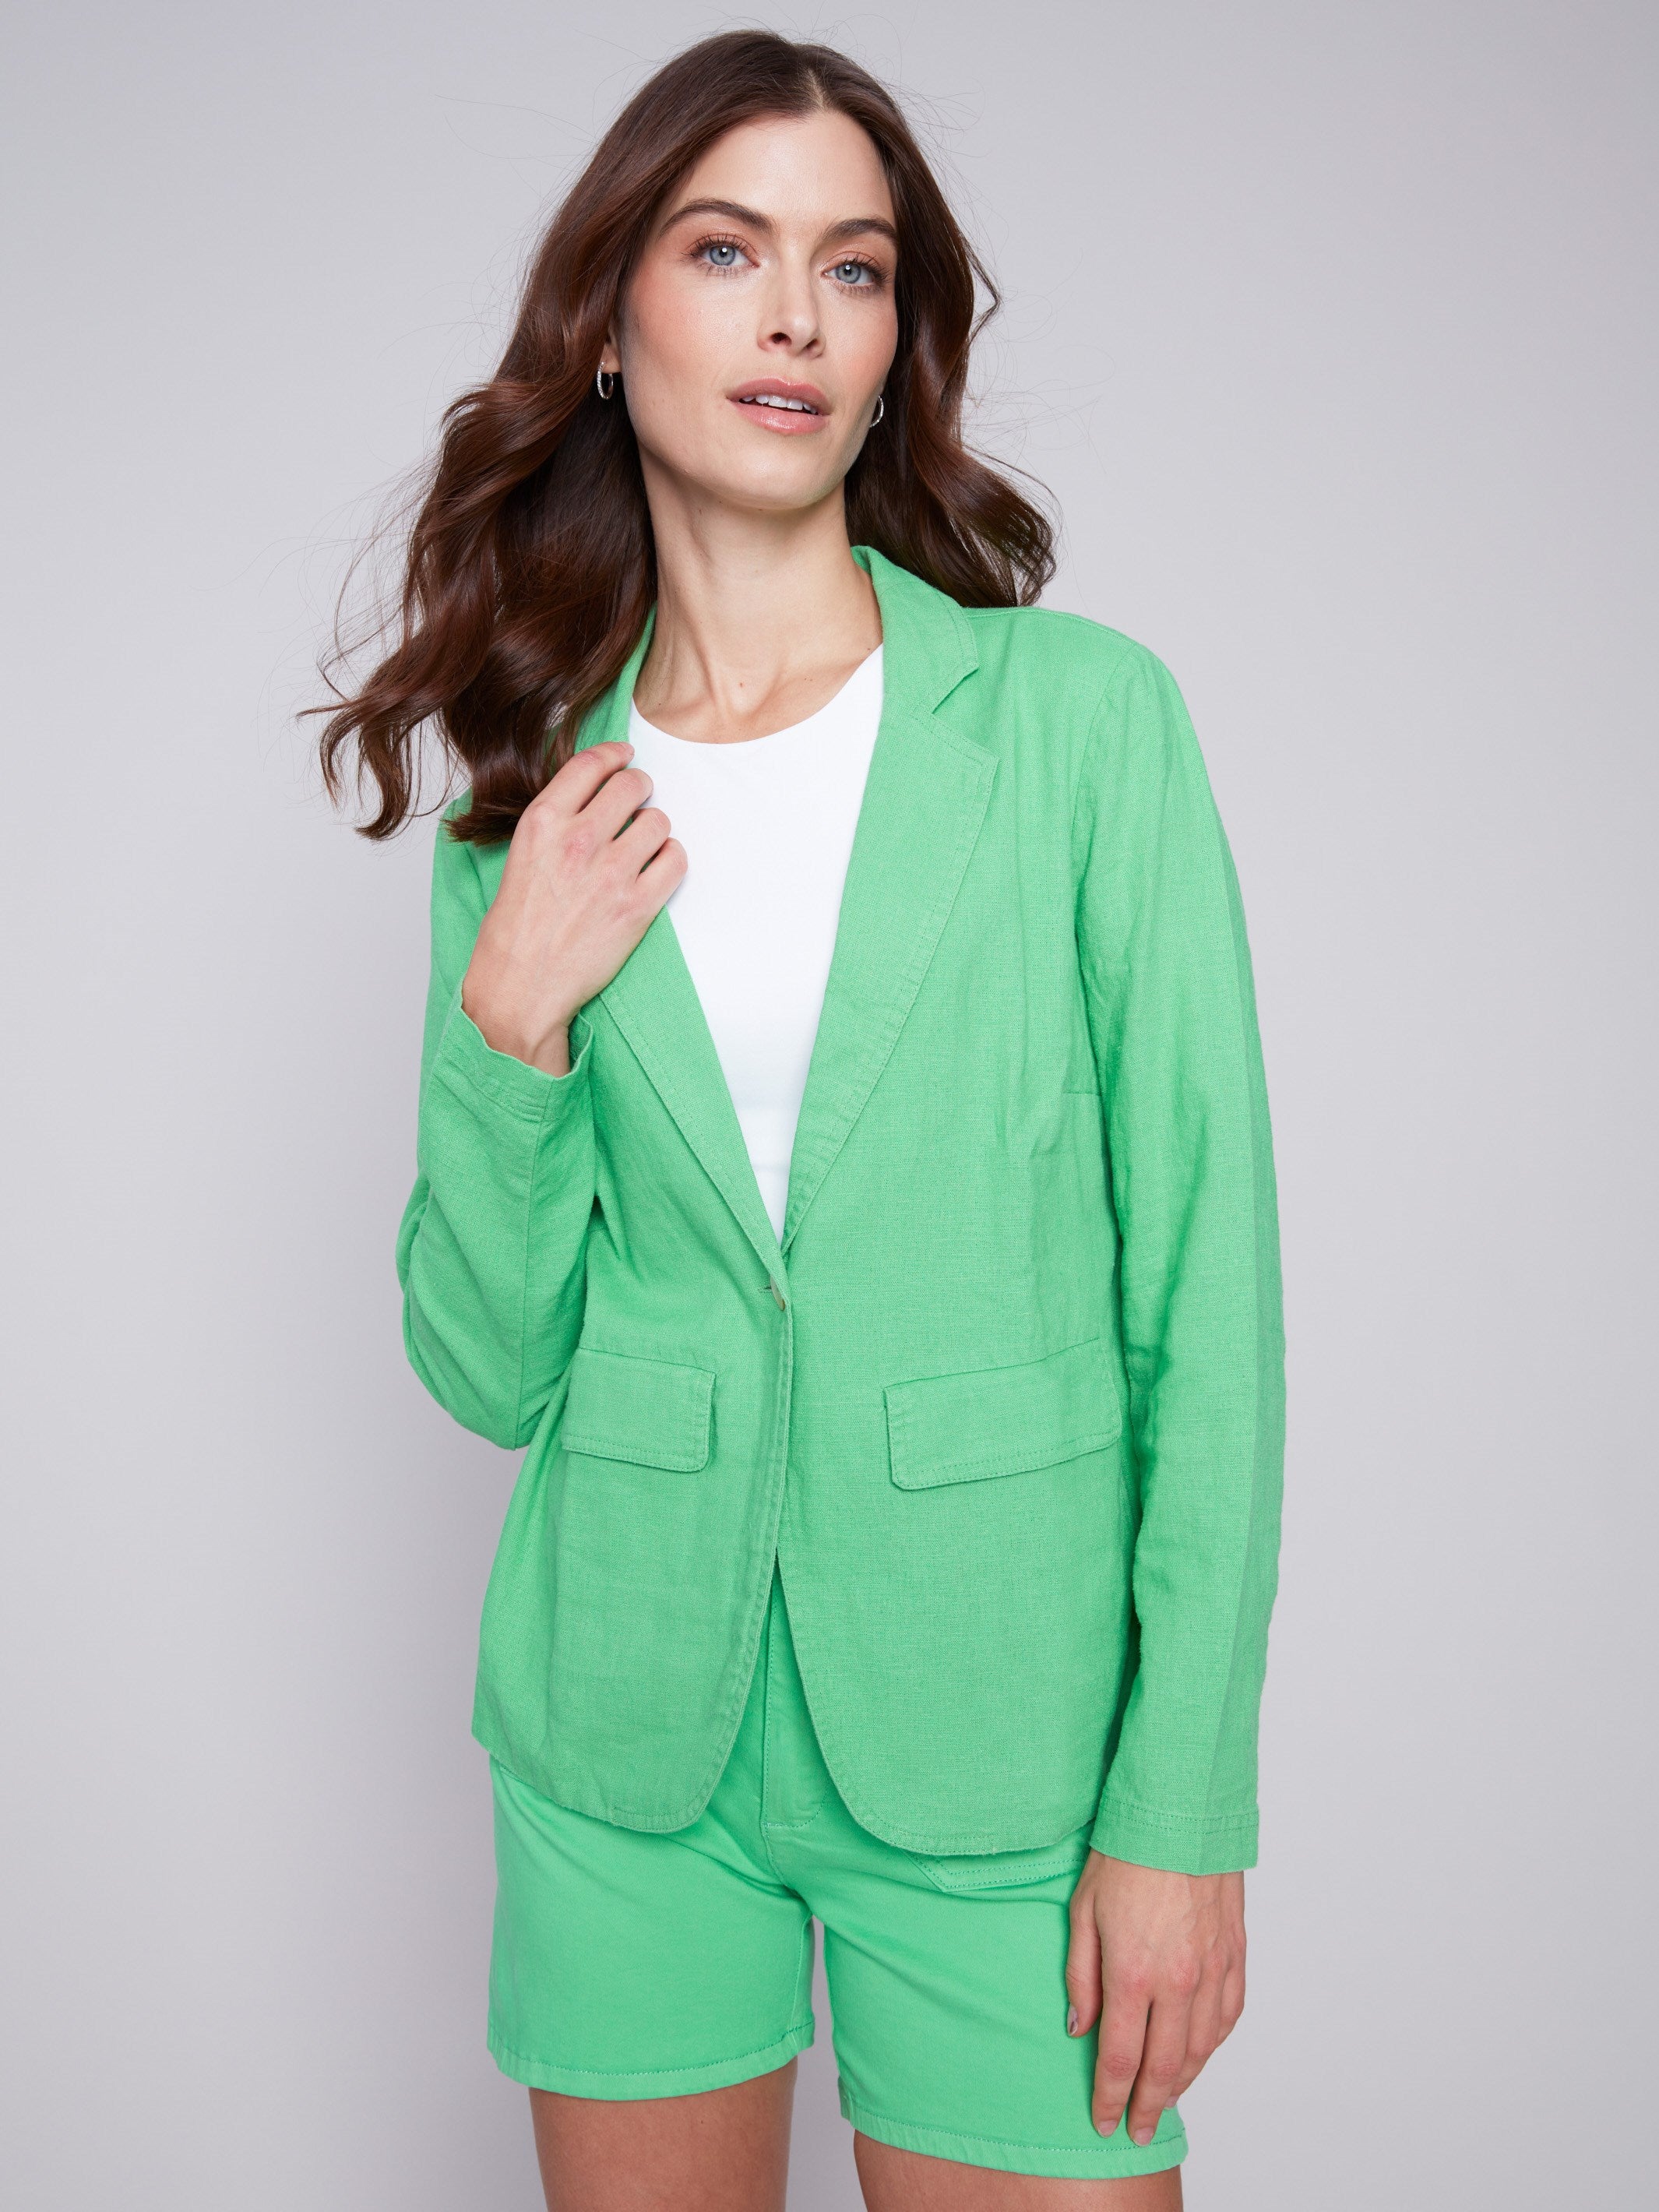 Light Linen Blend Blazer - Emerald - Charlie B Collection Canada - Image 1